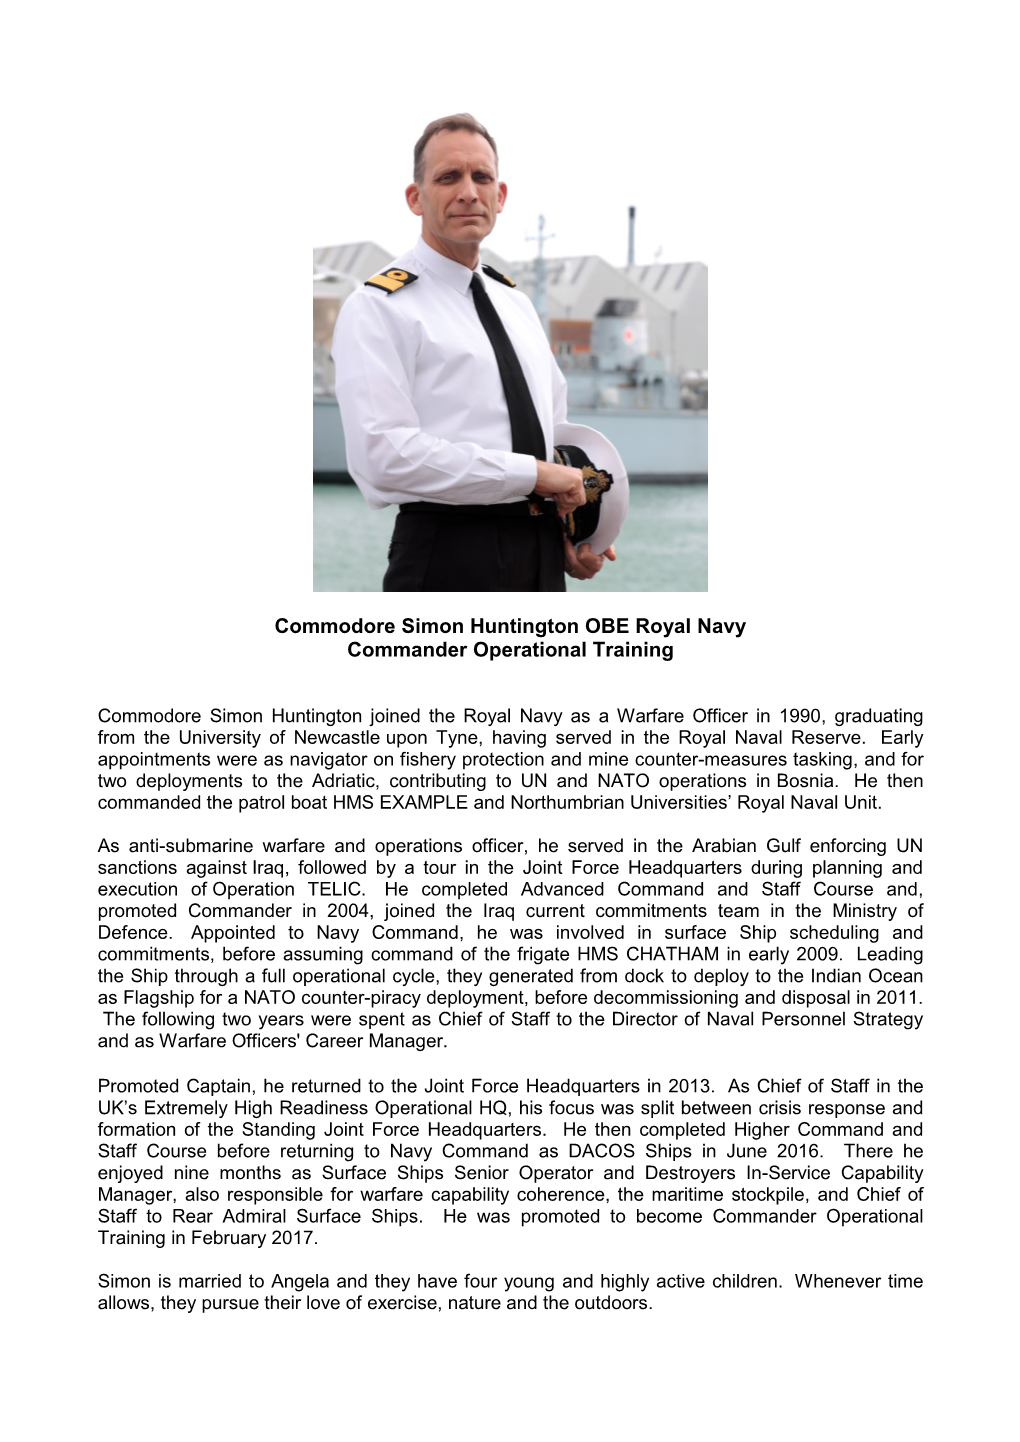 Captain Simon Huntington Joined the Royal Navy As a Warfare Officer In